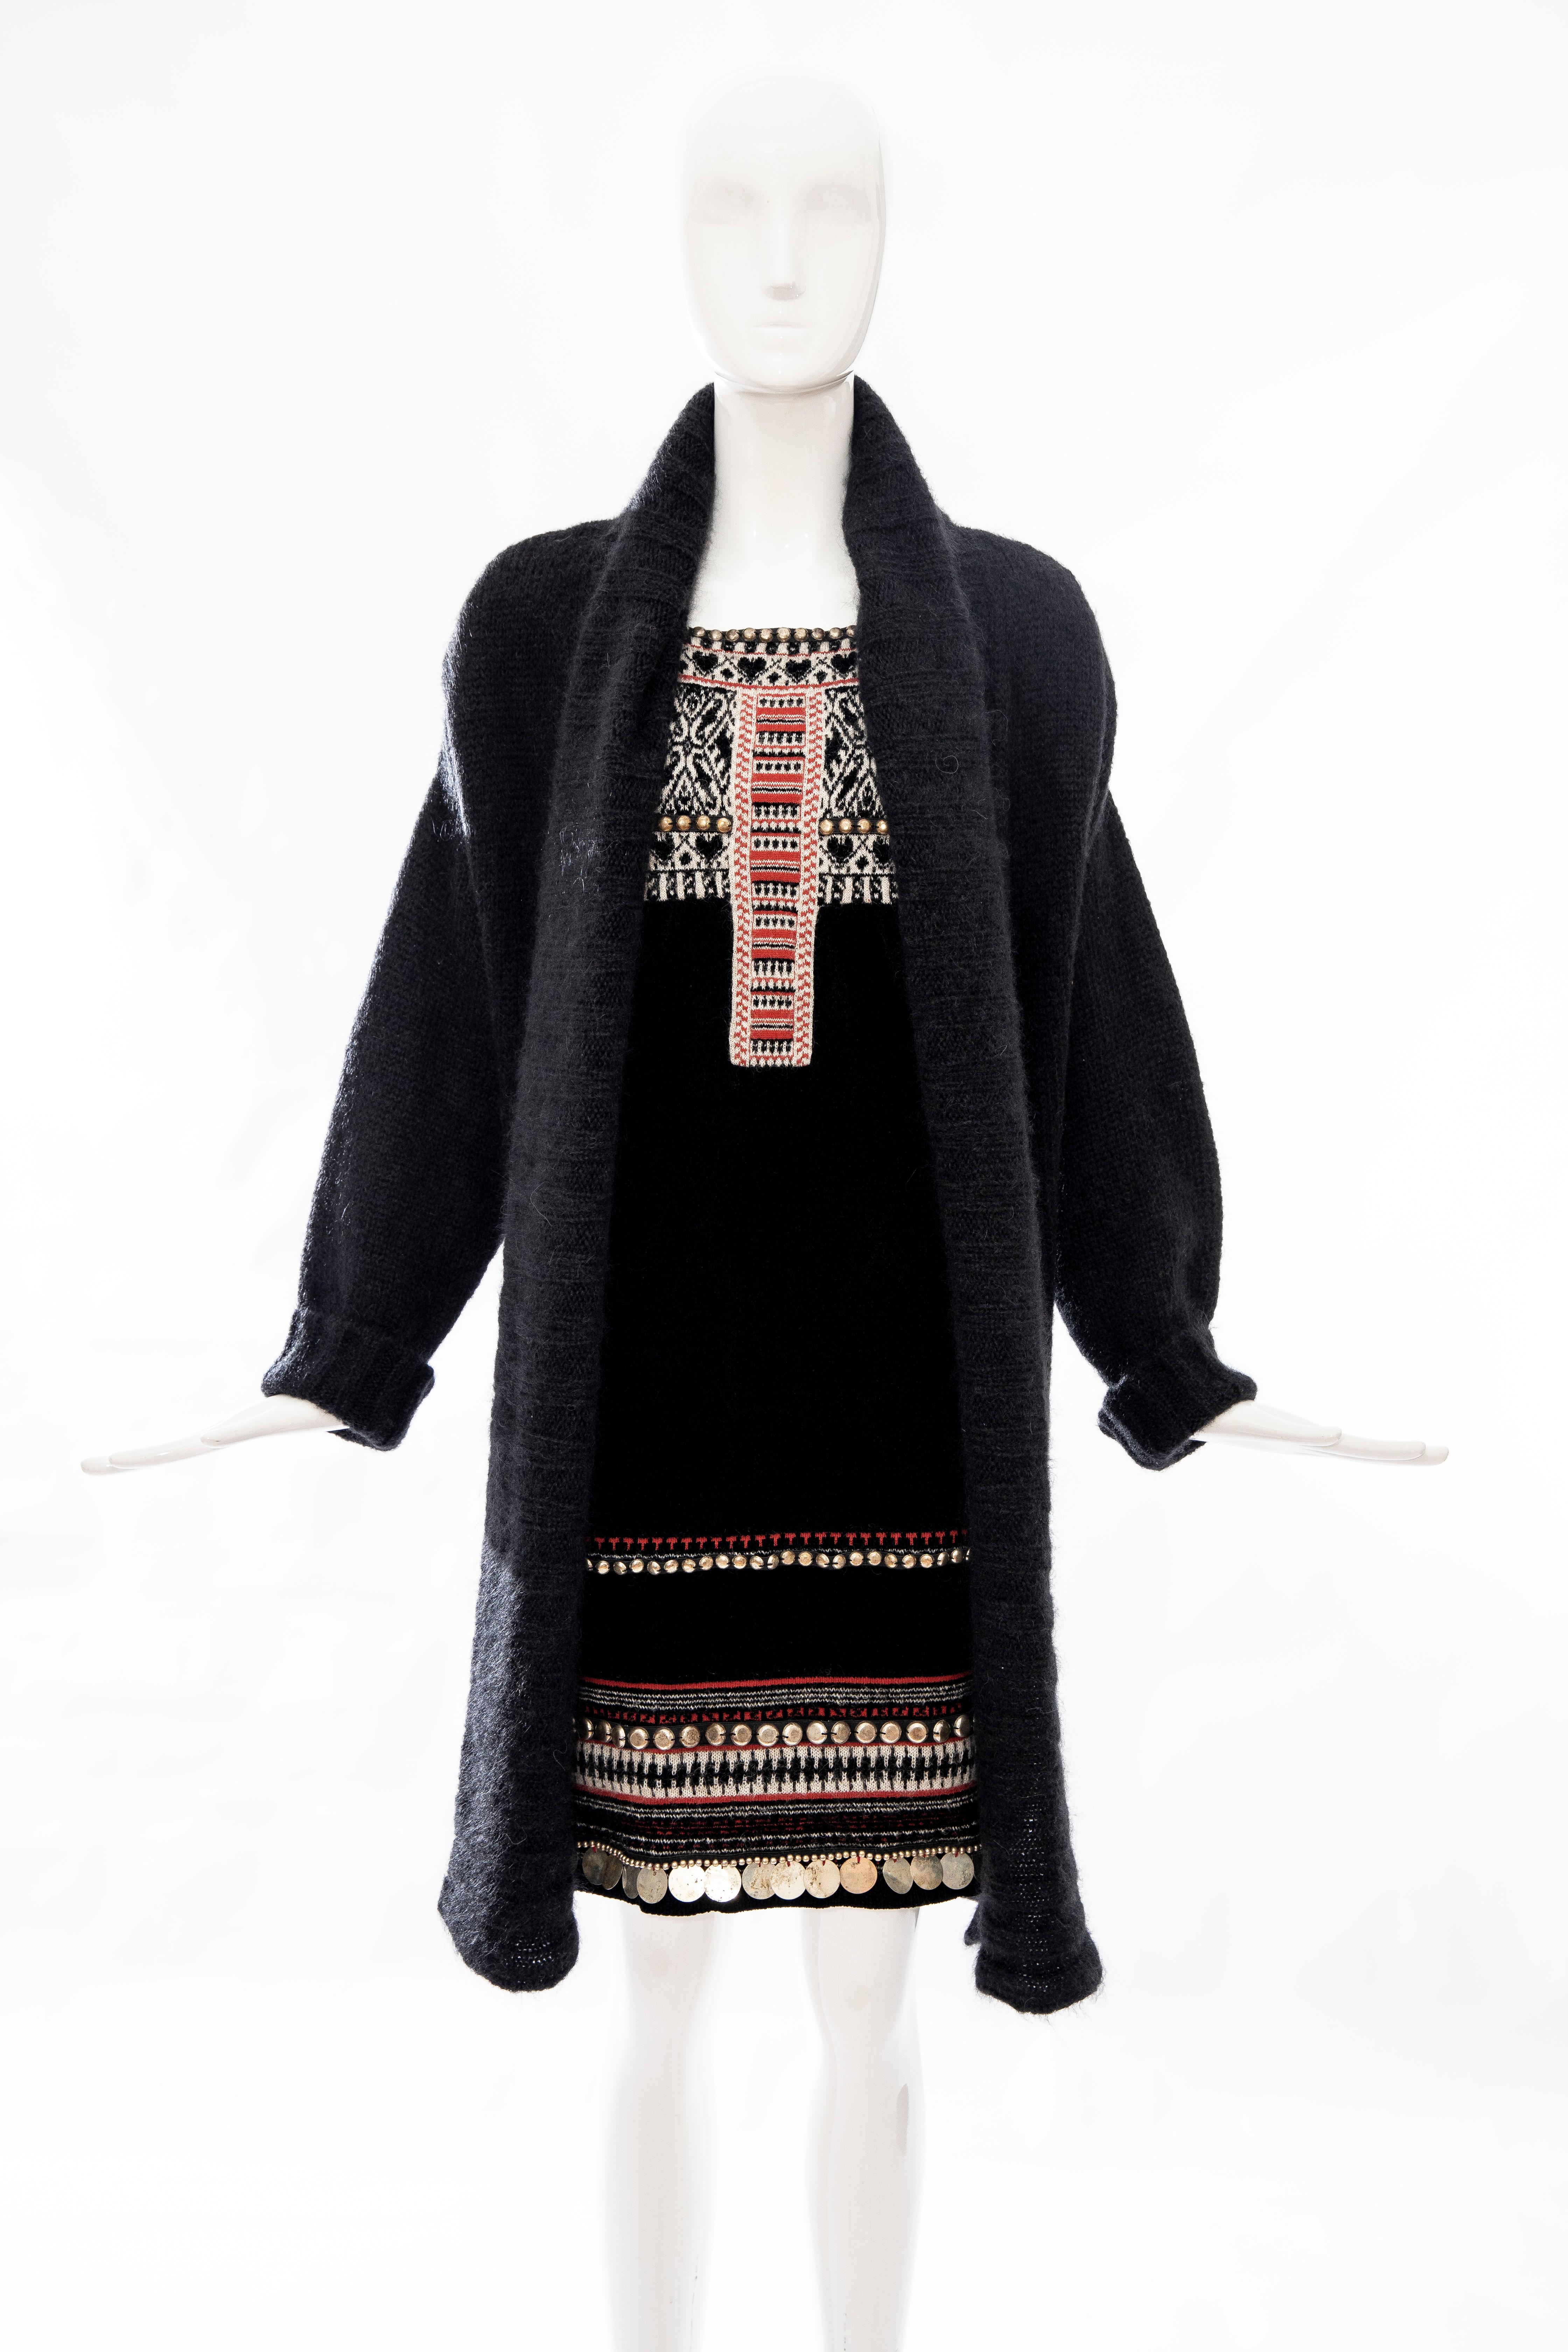 Black Jean Paul Gaultier Runway Mohair Knit Appliquéd Coins Sweater Dress , Fall 2010 For Sale